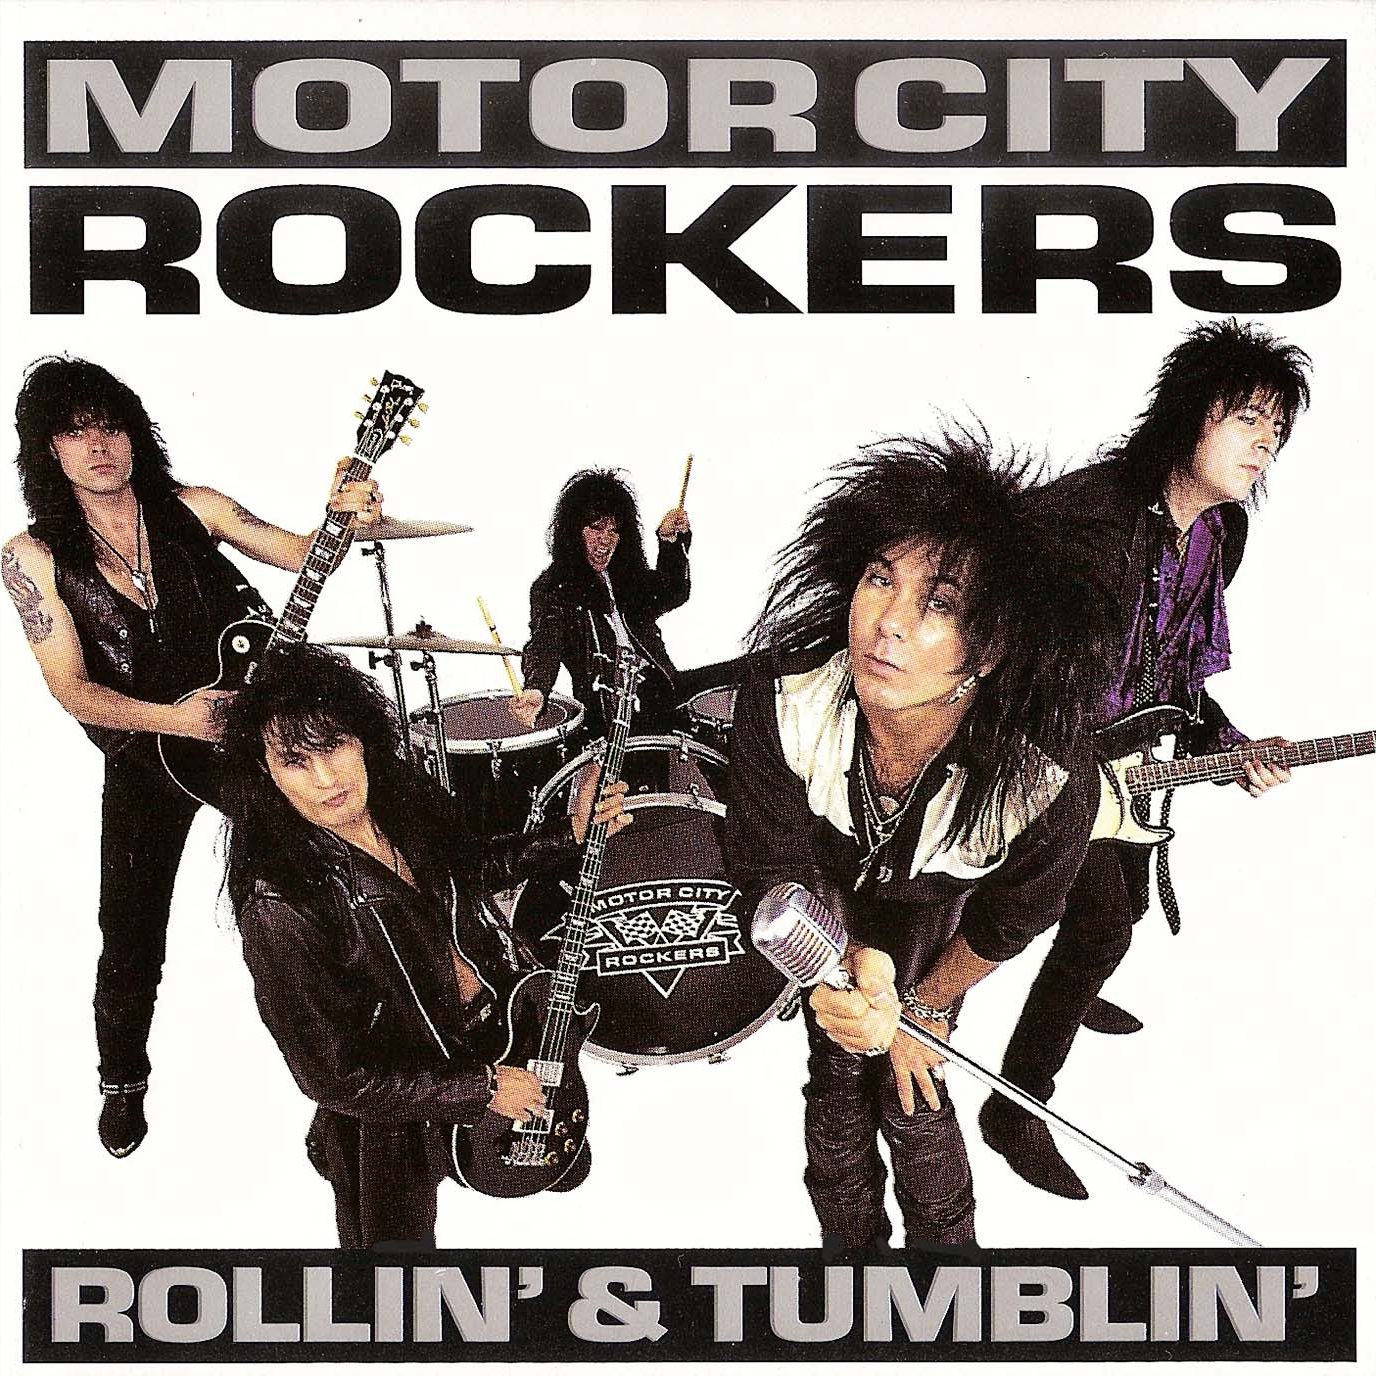 Motor City Rockers “Rollin’ & Tumblin’”